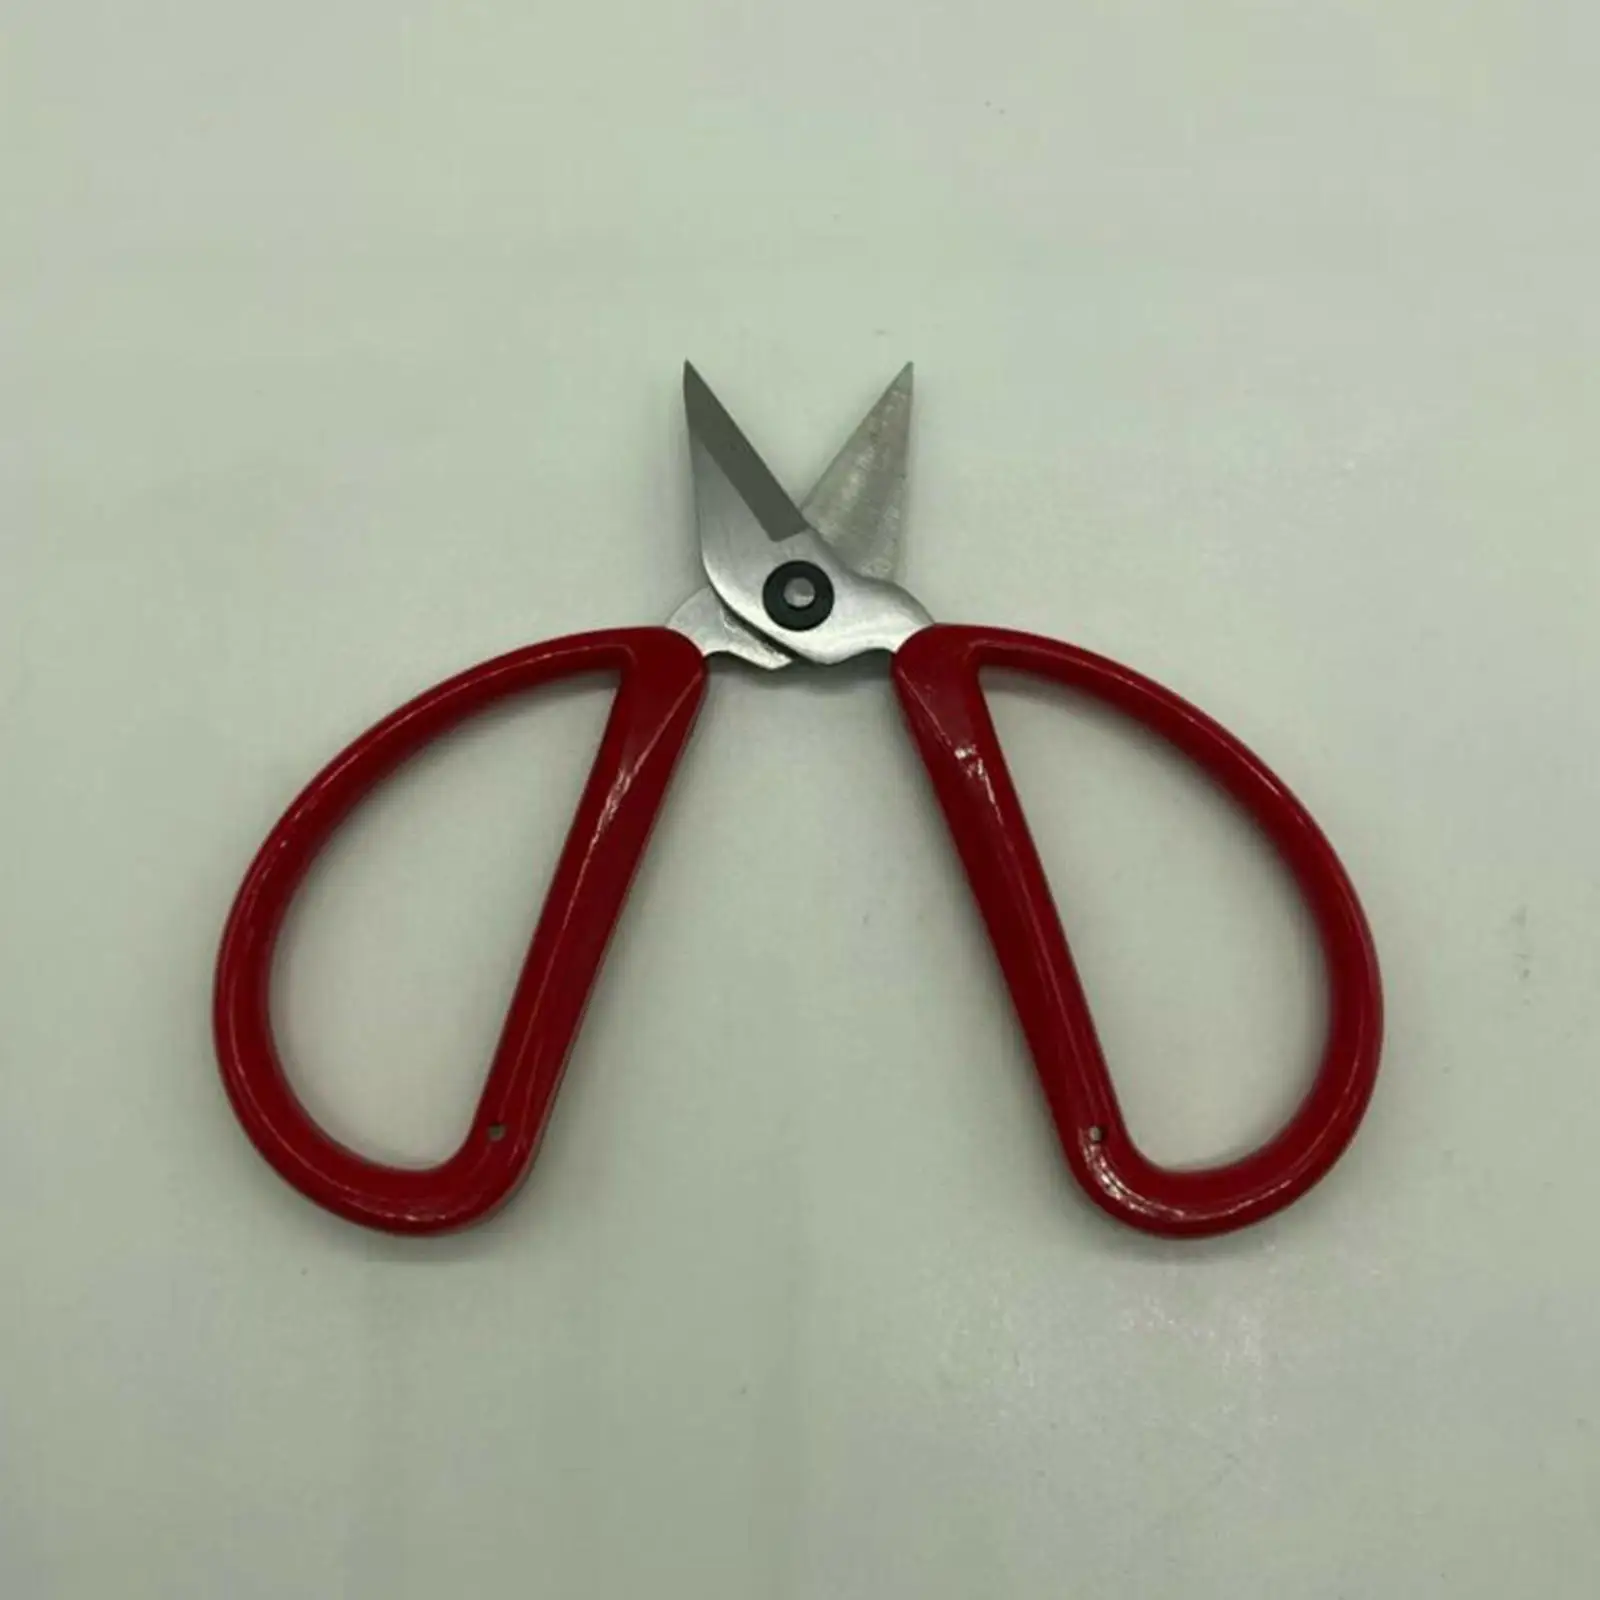 Diagonal Cutting Scissors Portable Repairing Tennis Racket Wire Cutter